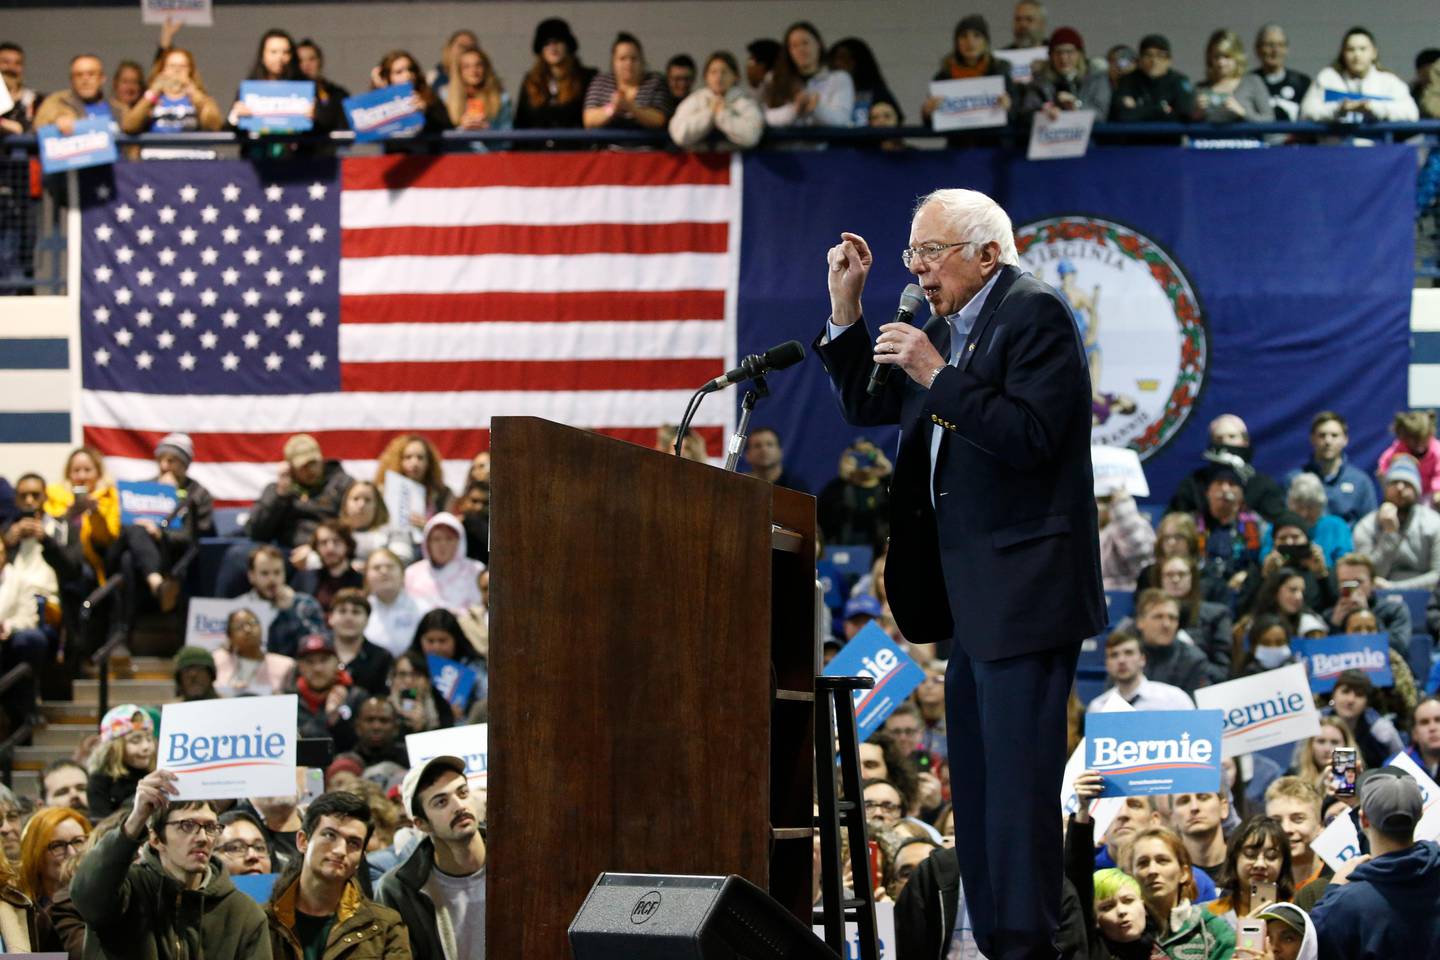 Democratic presidential candidate Sen. Bernie Sanders, I-Vt., gestures during a campaign rally Saturday, Feb. 29, 2020, in Virginia Beach, Va. (AP Photo/Steve Helber)